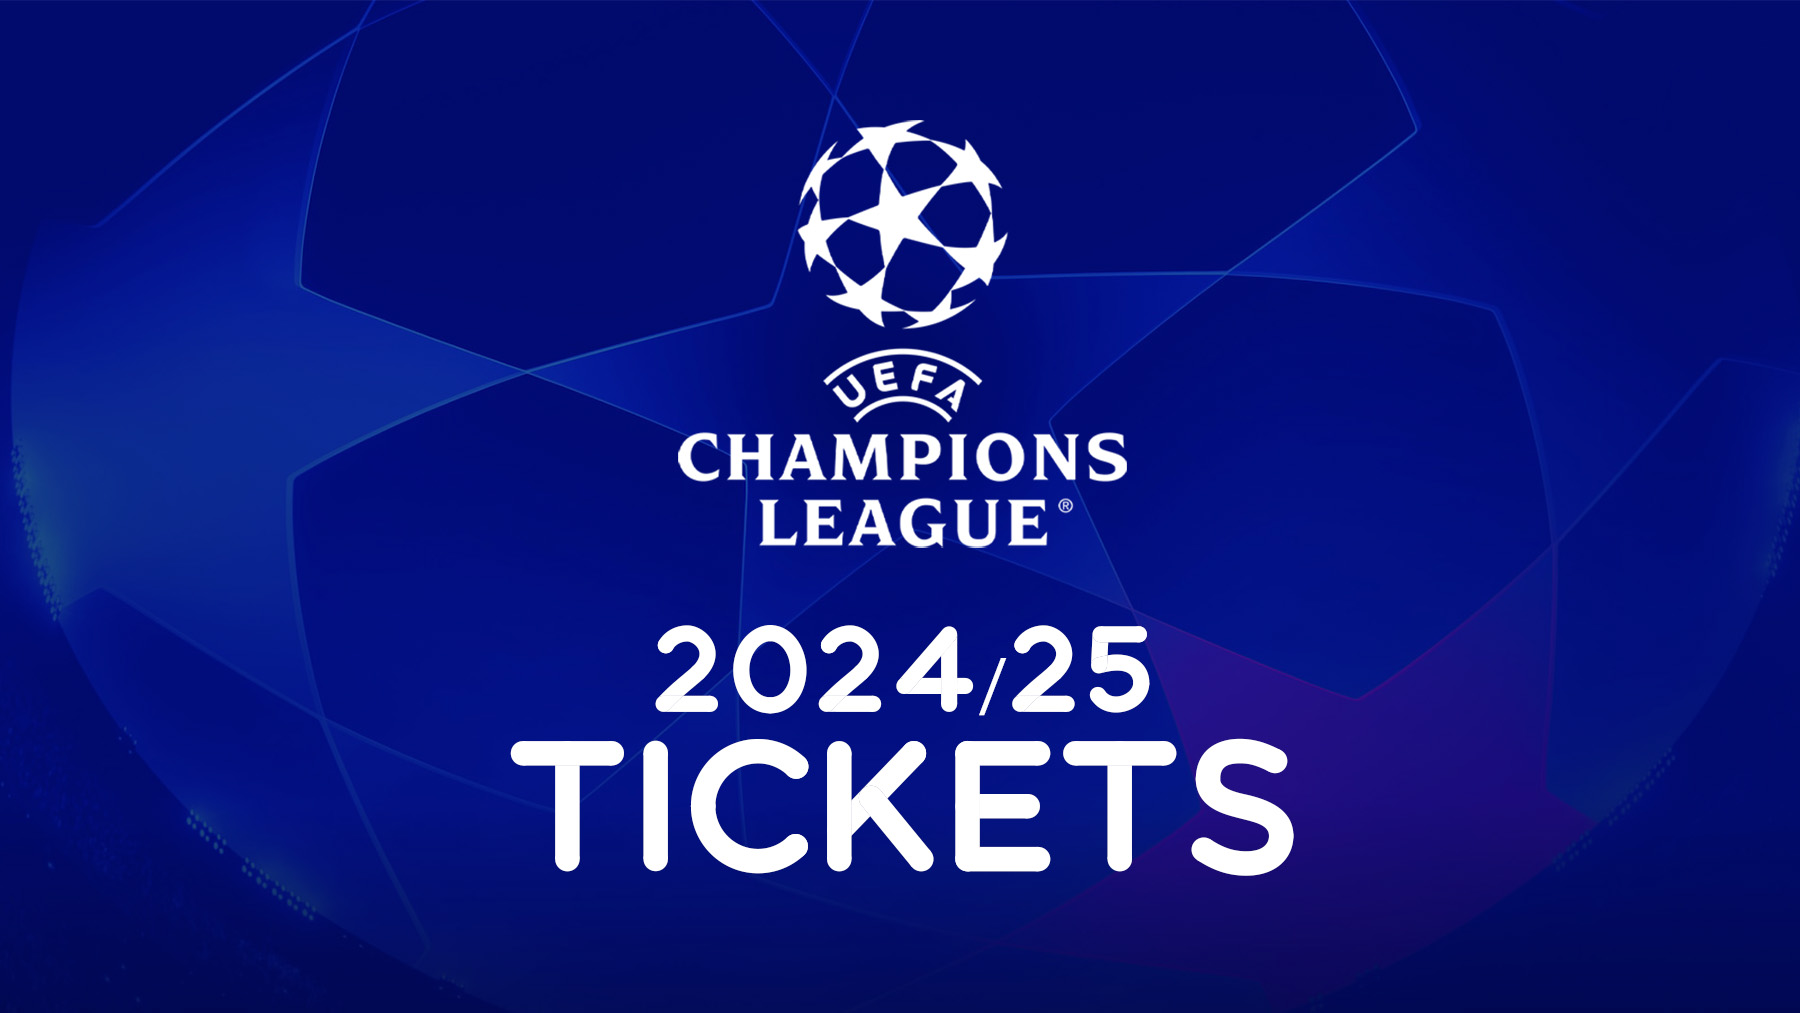 UEFA Champions League 2024/25 Tickets